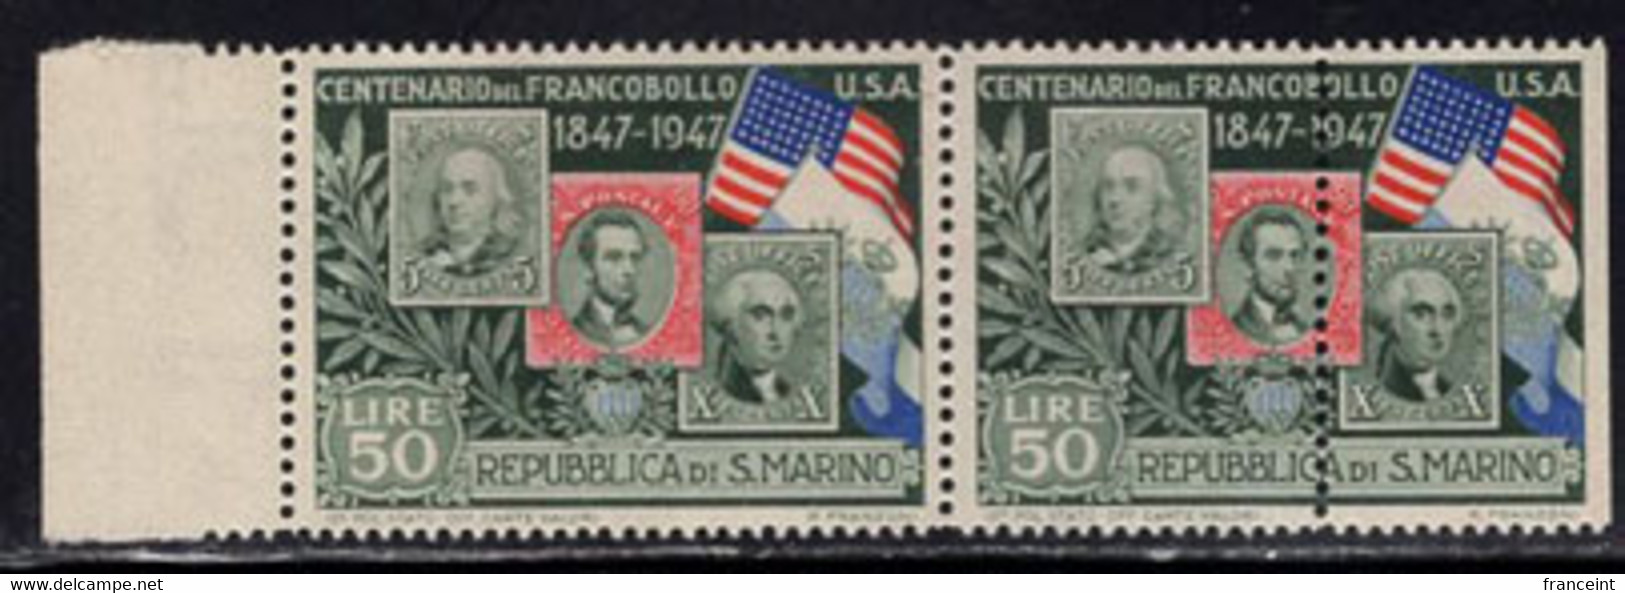 SAN MARINO(1947) US Stamps. Flag. Pair Misperforated Vertically. Scott No 271, Yvert No 313. - Variétés Et Curiosités